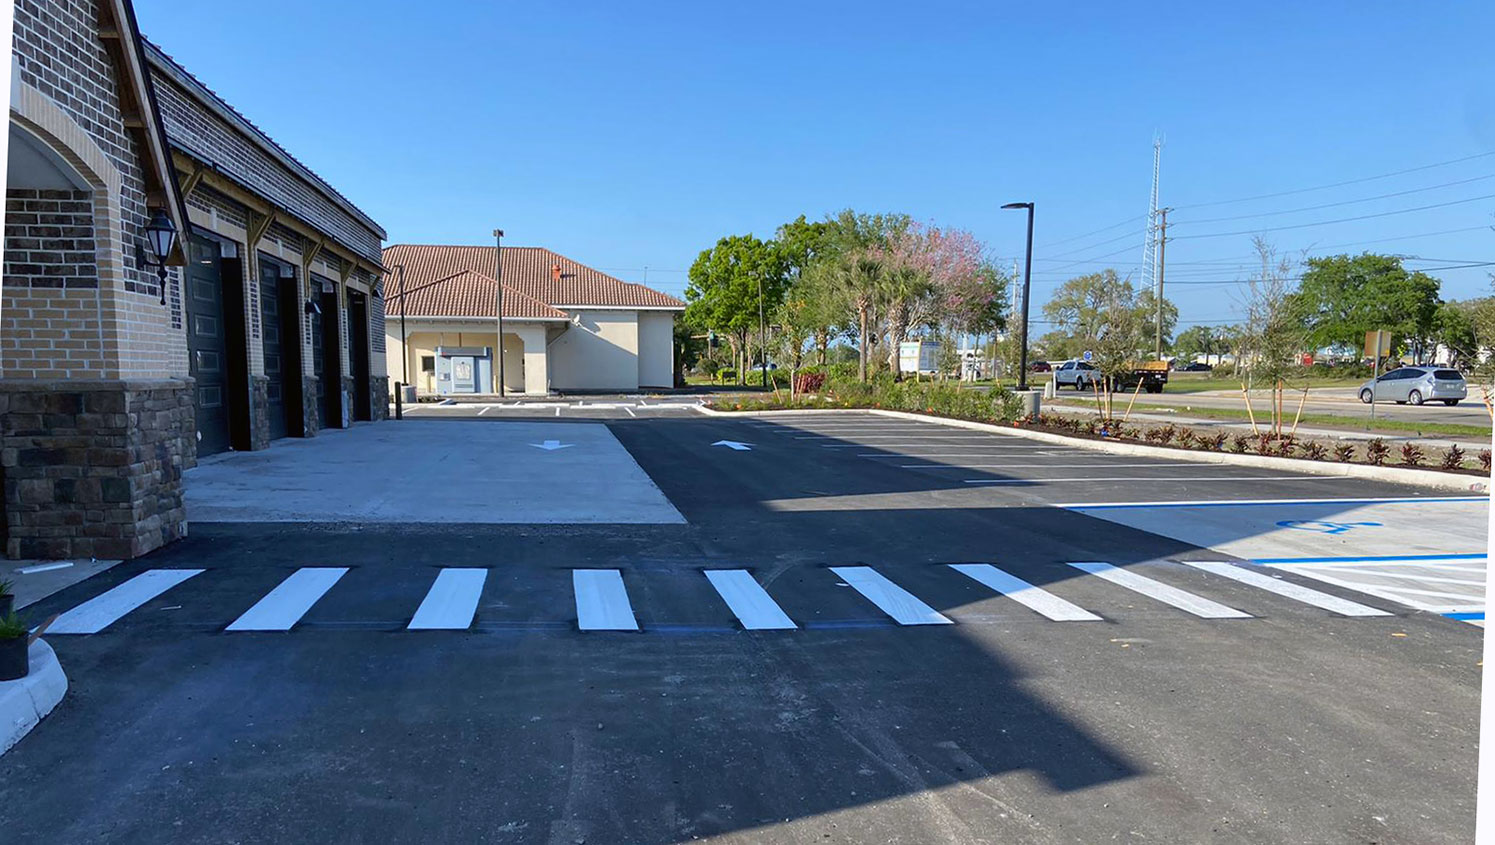 New crosswalk markings at Christian Brothers Automotive in Sarasota FL